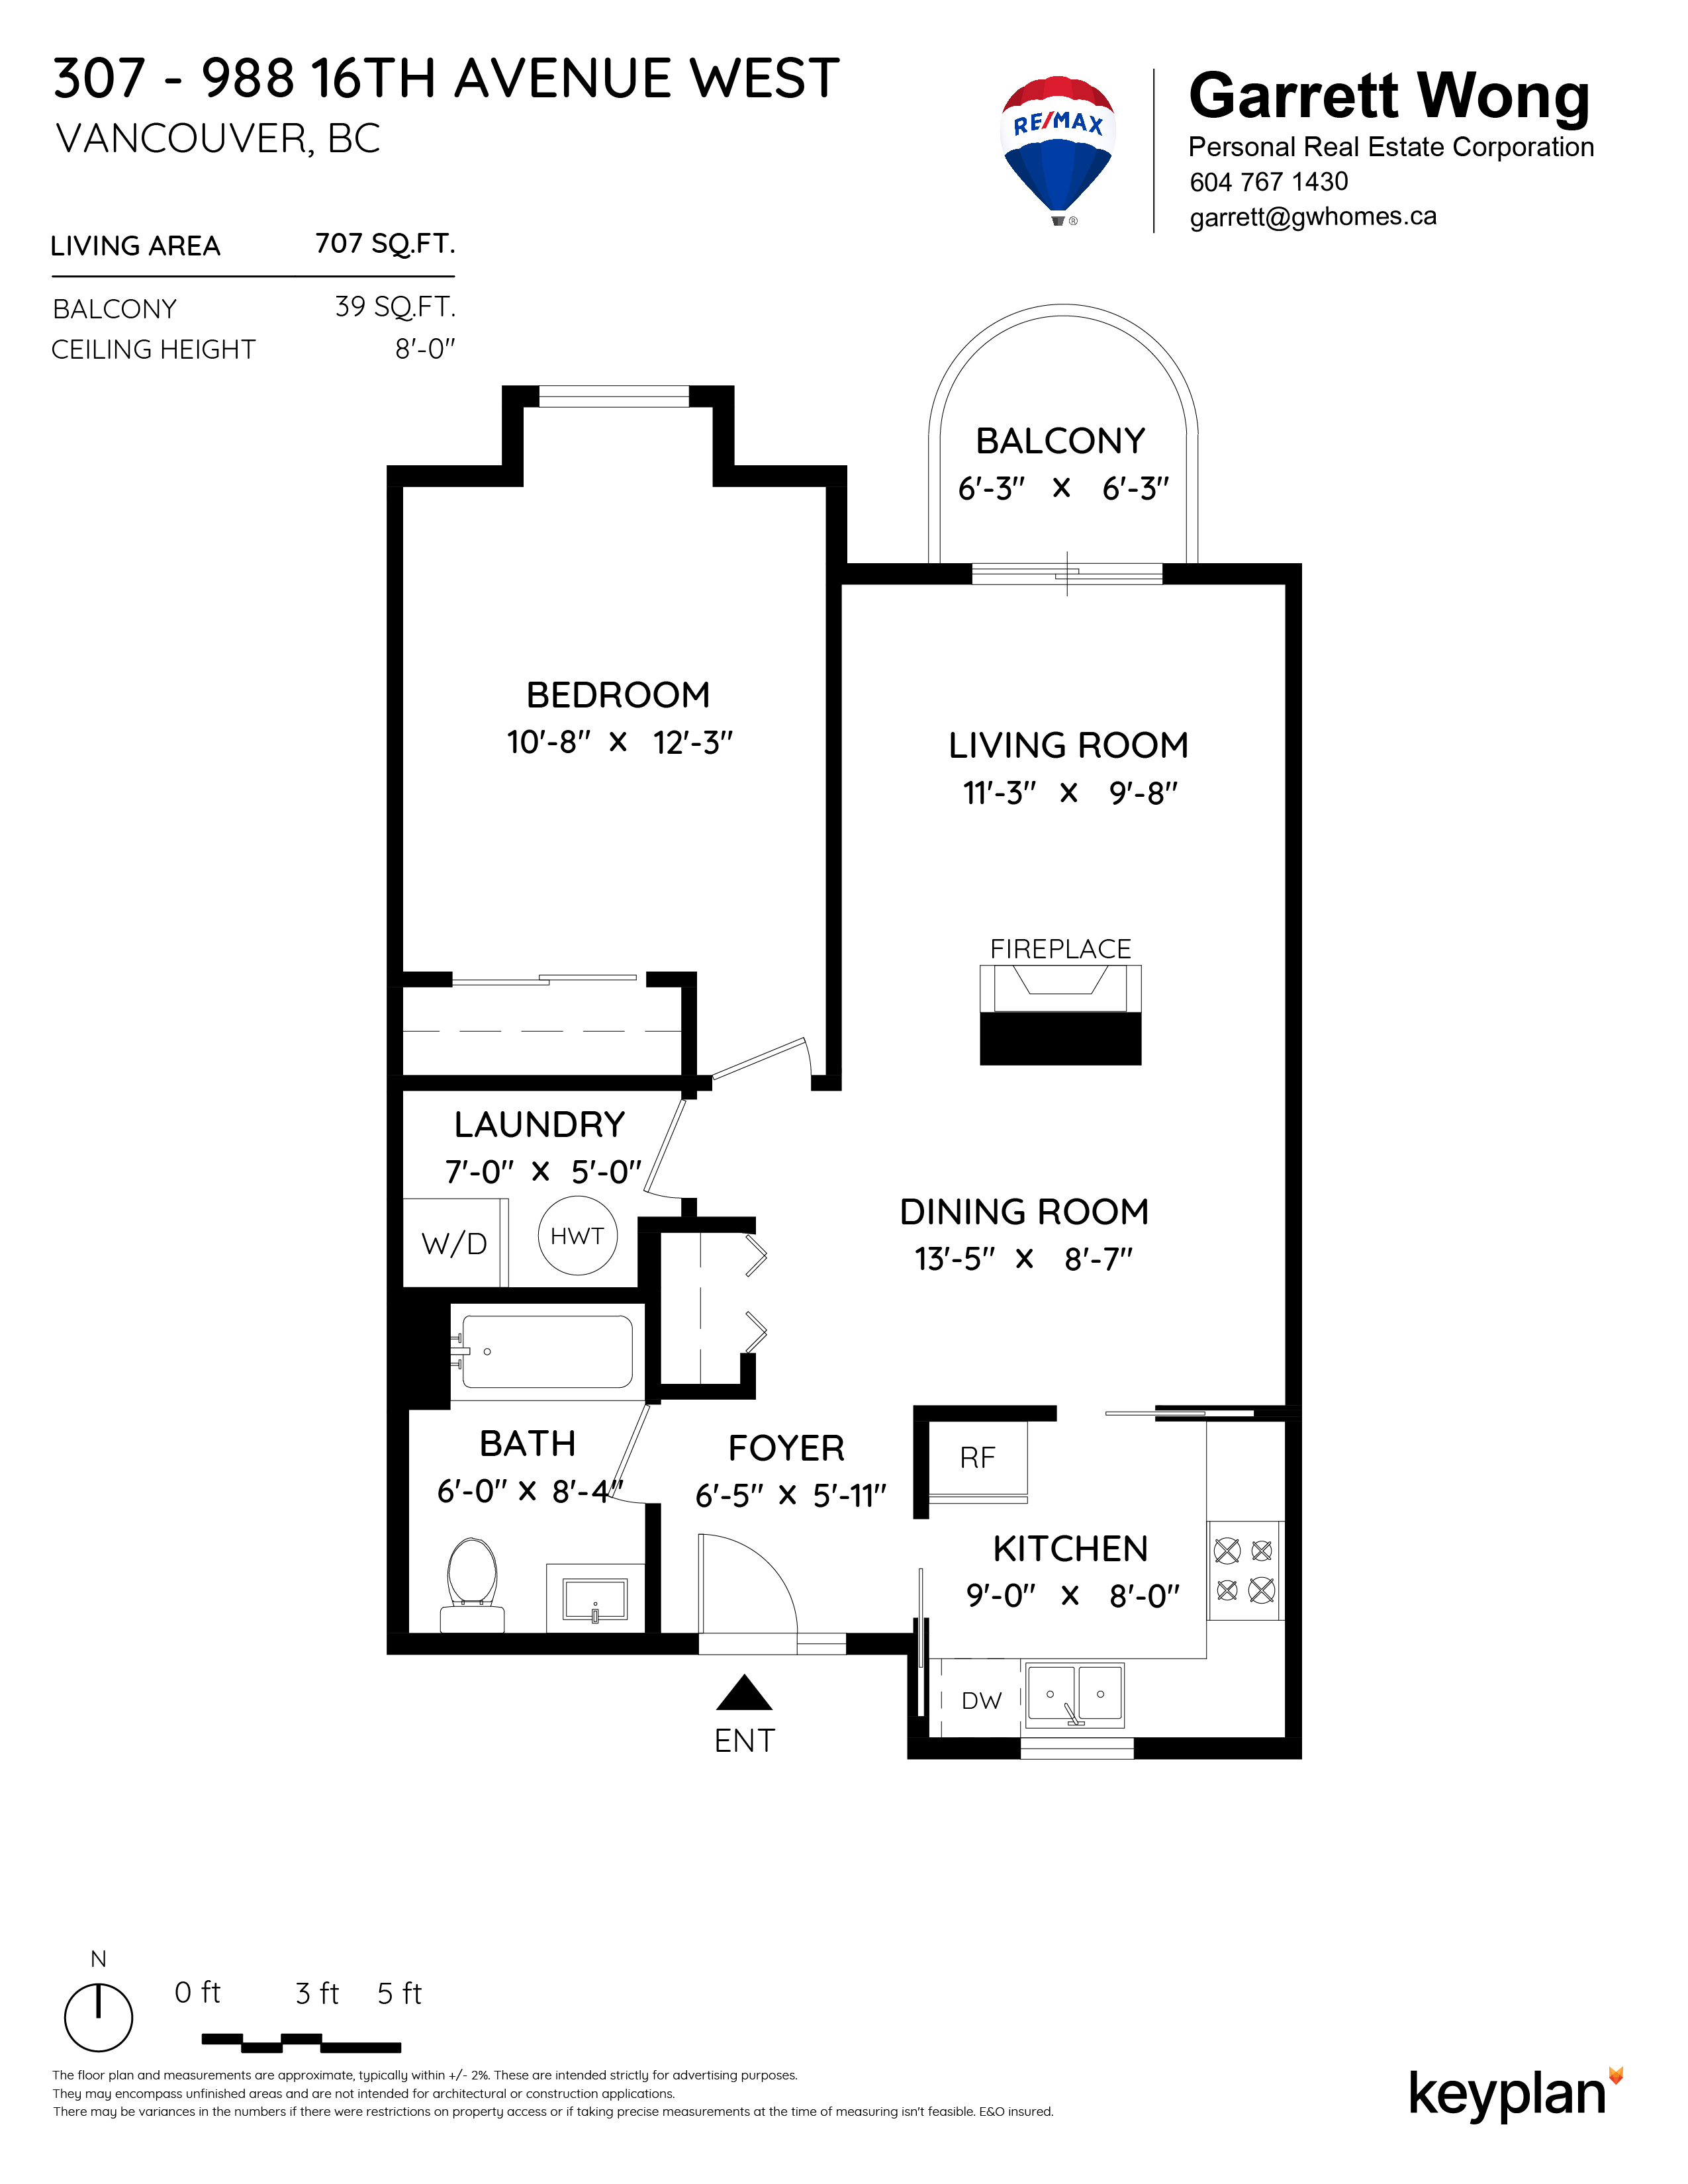 Garrett Wong - Unit 307 - 988 16th Avenue West, Vancouver, BC, V5Z 1T2 Canada | Floor Plan 1